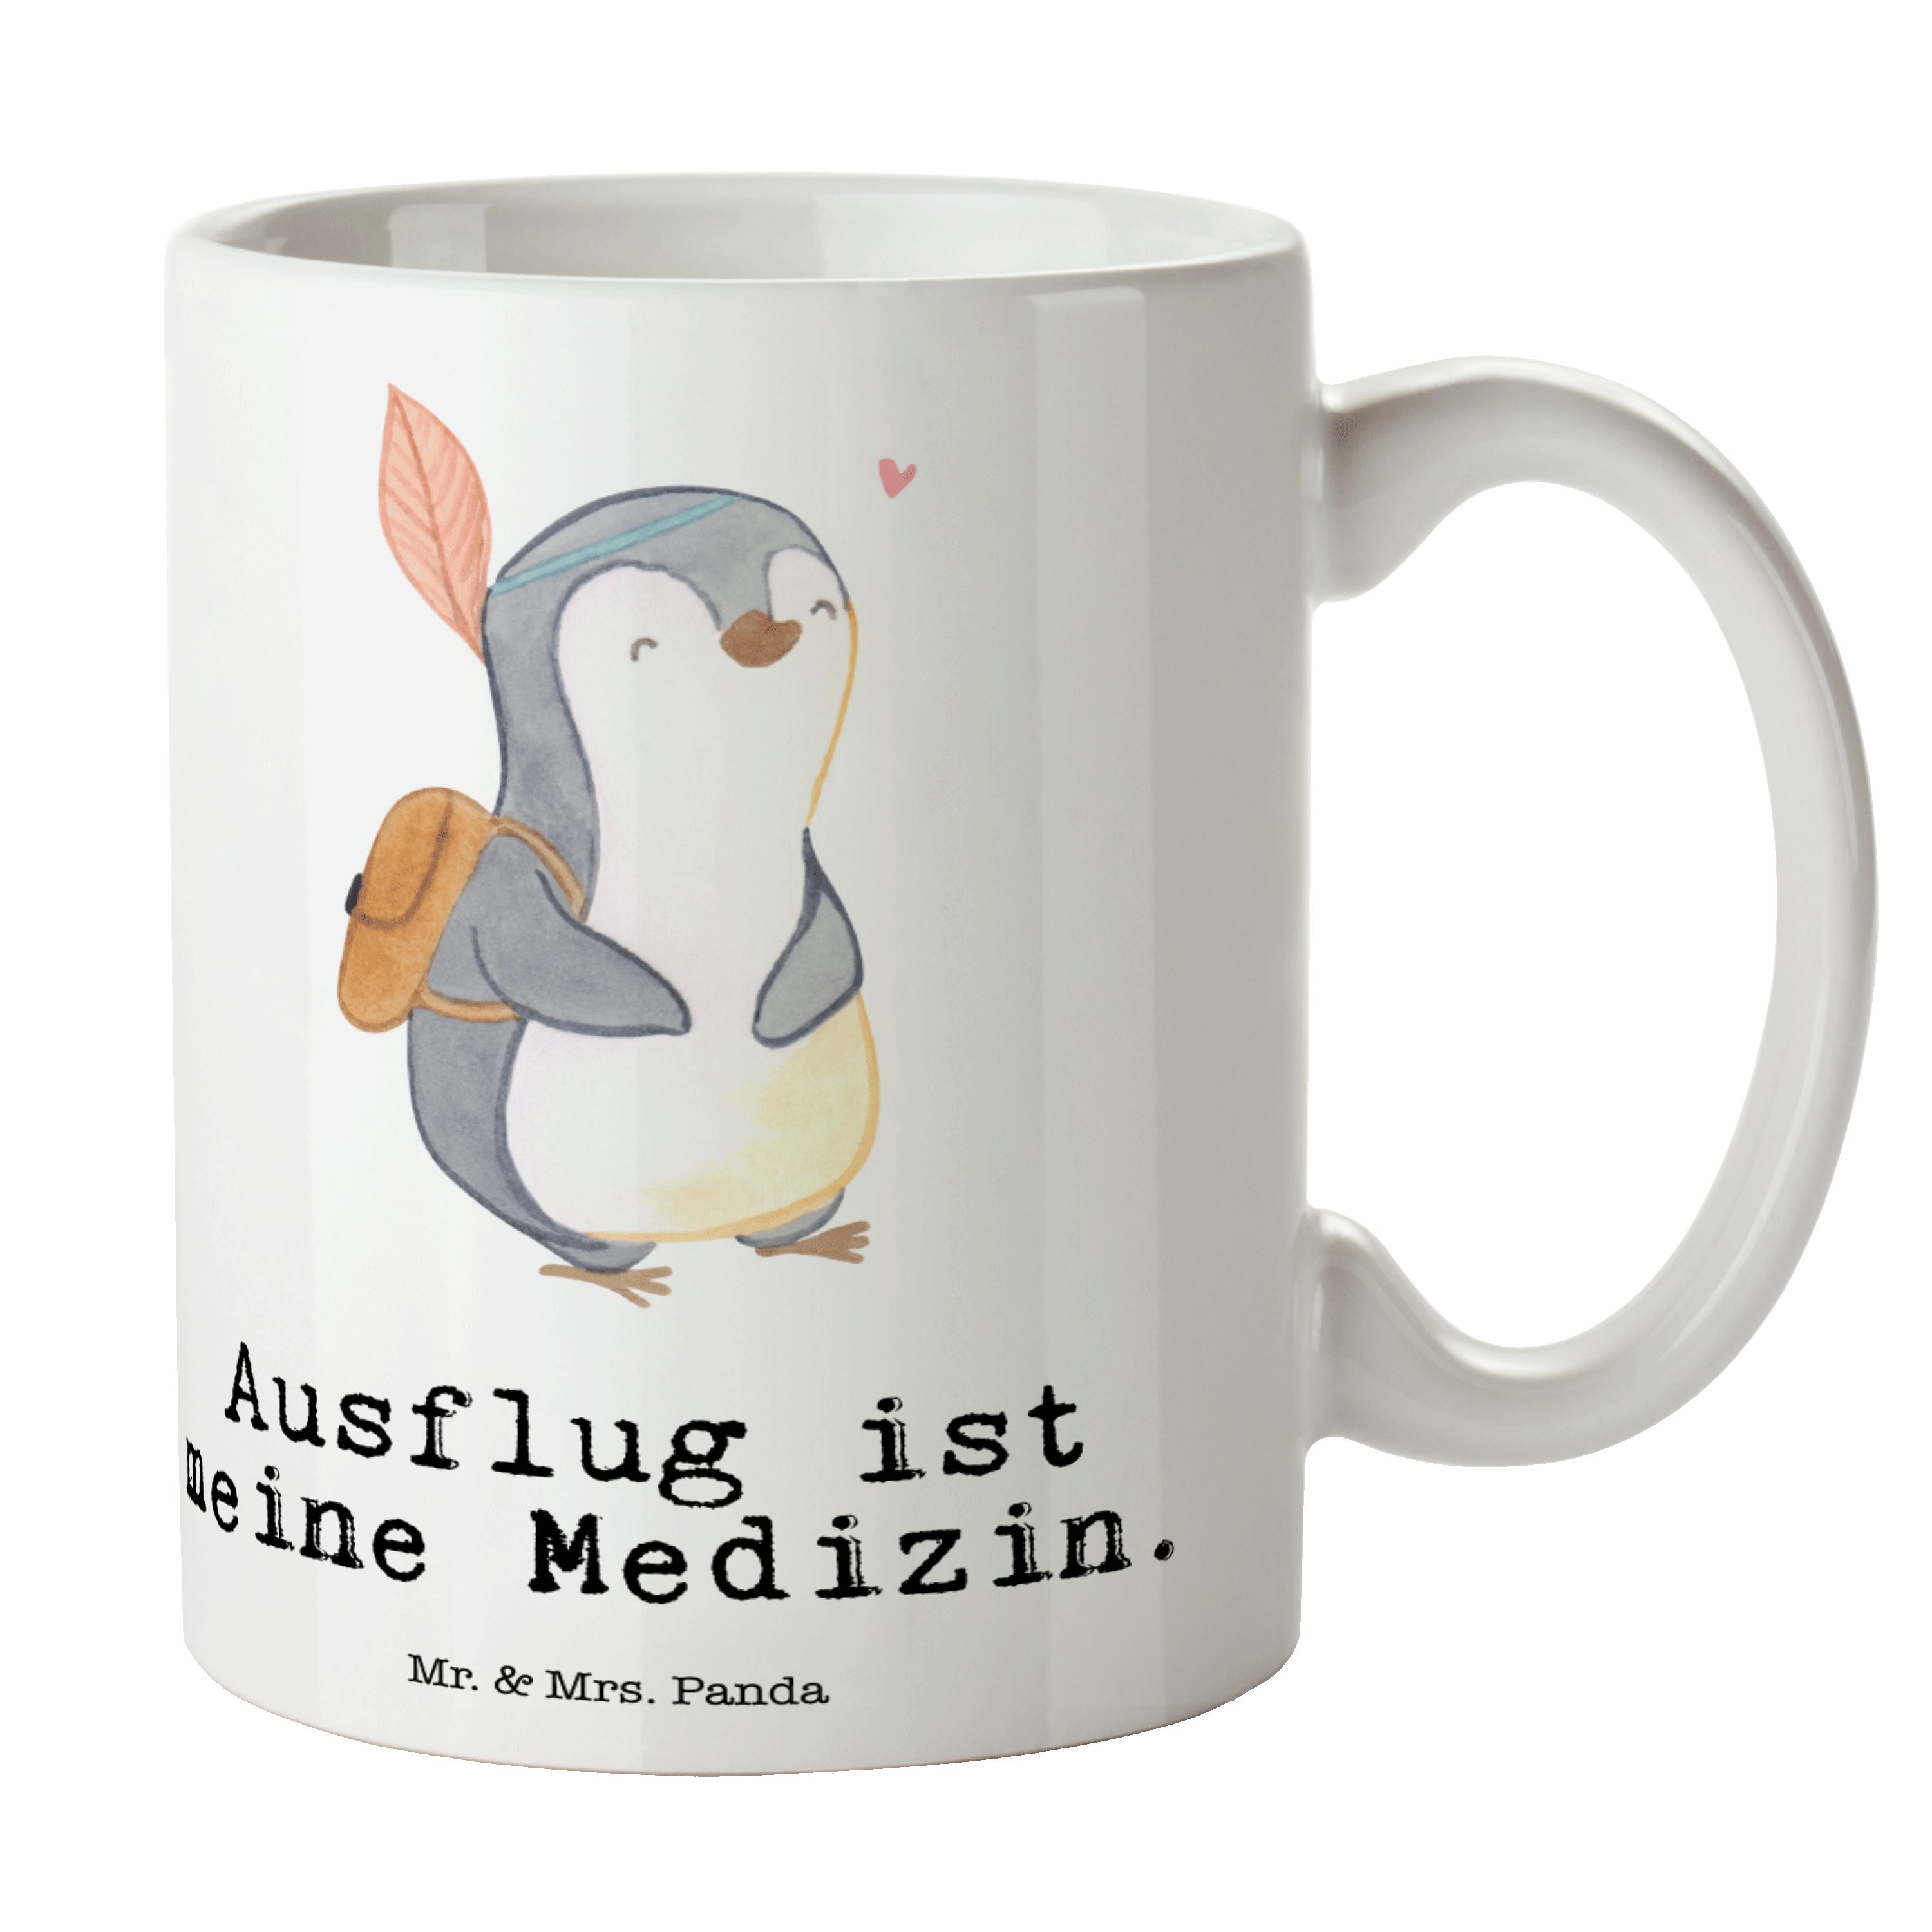 Mr. & Mrs. Panda Tasse Pinguin Ausflug Medizin - Weiß - Geschenk, Kaffeebecher, Teetasse, Ta, Keramik